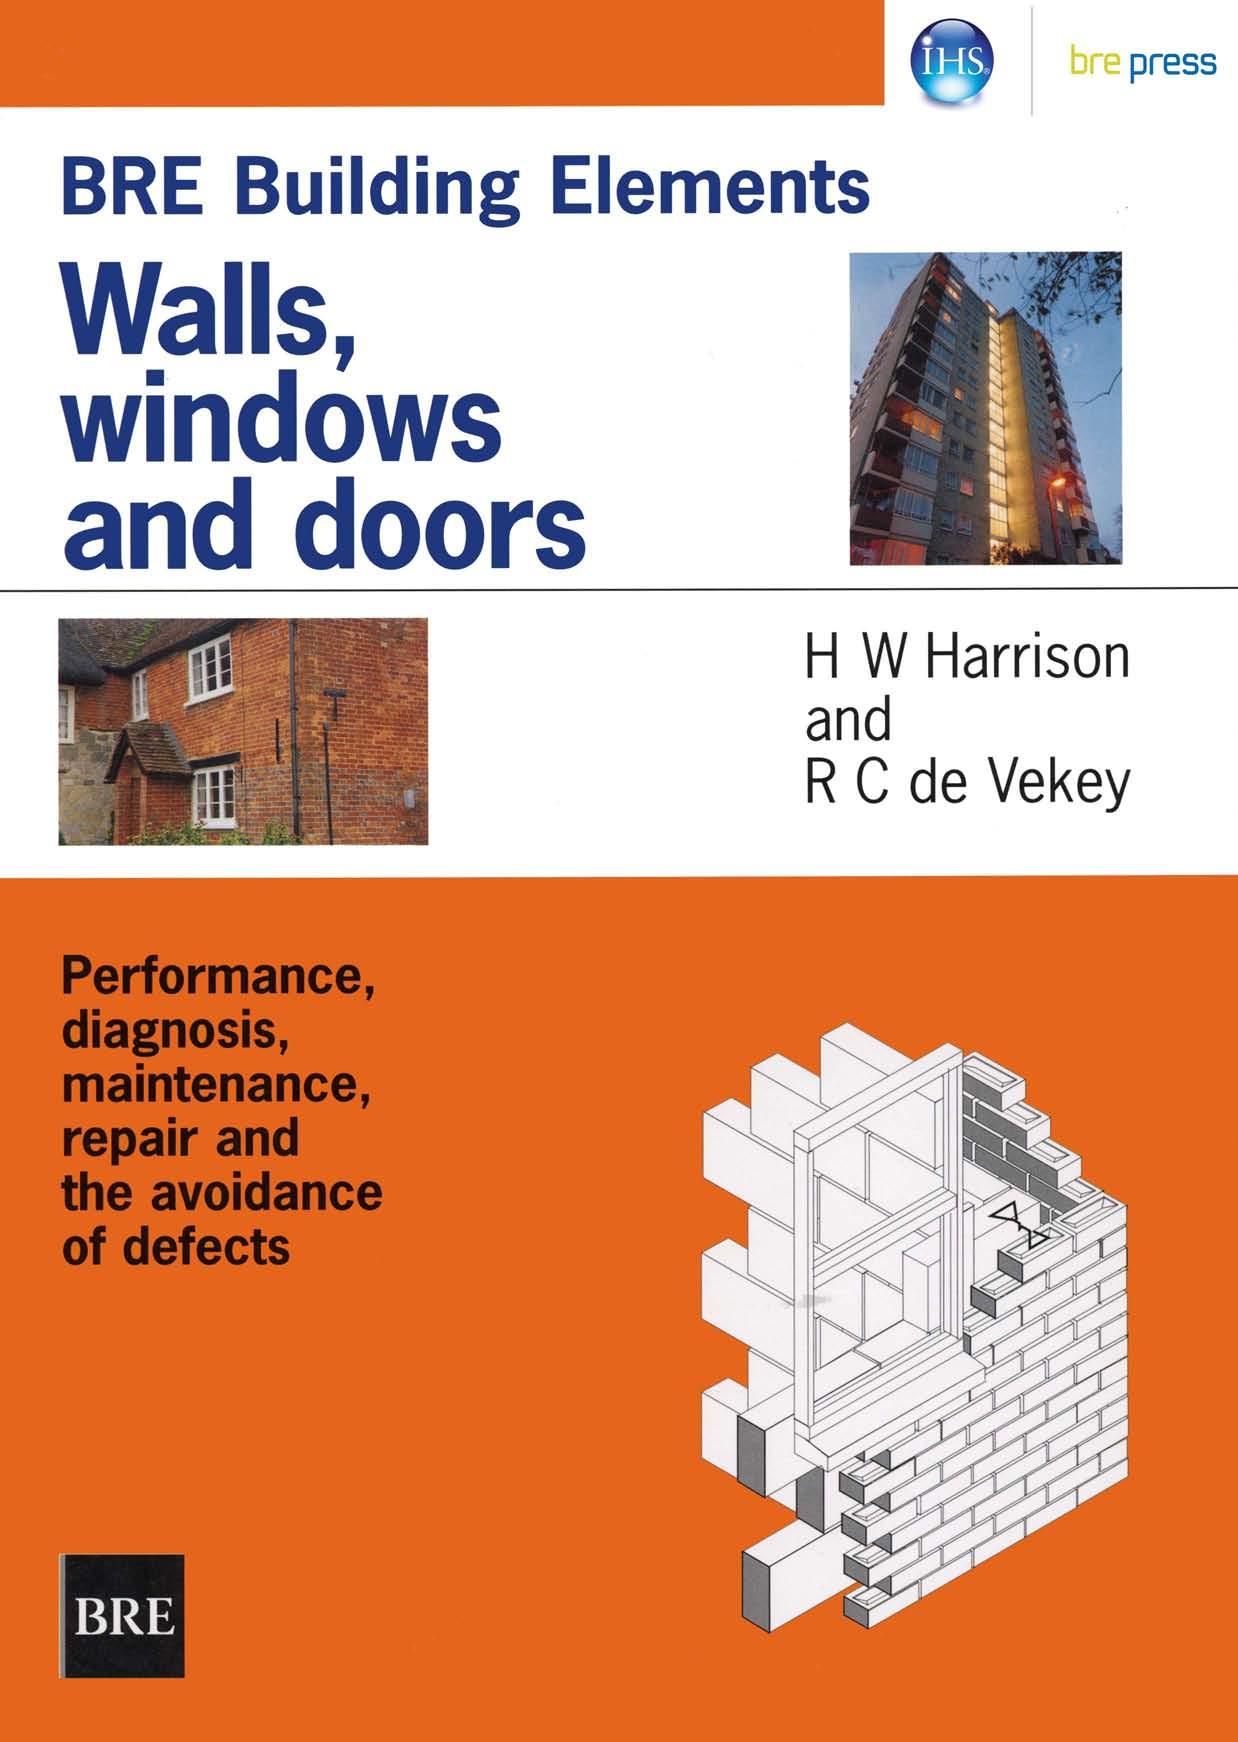 IHS BRE Press: BRE Building Elements: Walls, Windows & Doors: Performance, Diagnosis, Maintenance, Repair & Avoidance of Defects